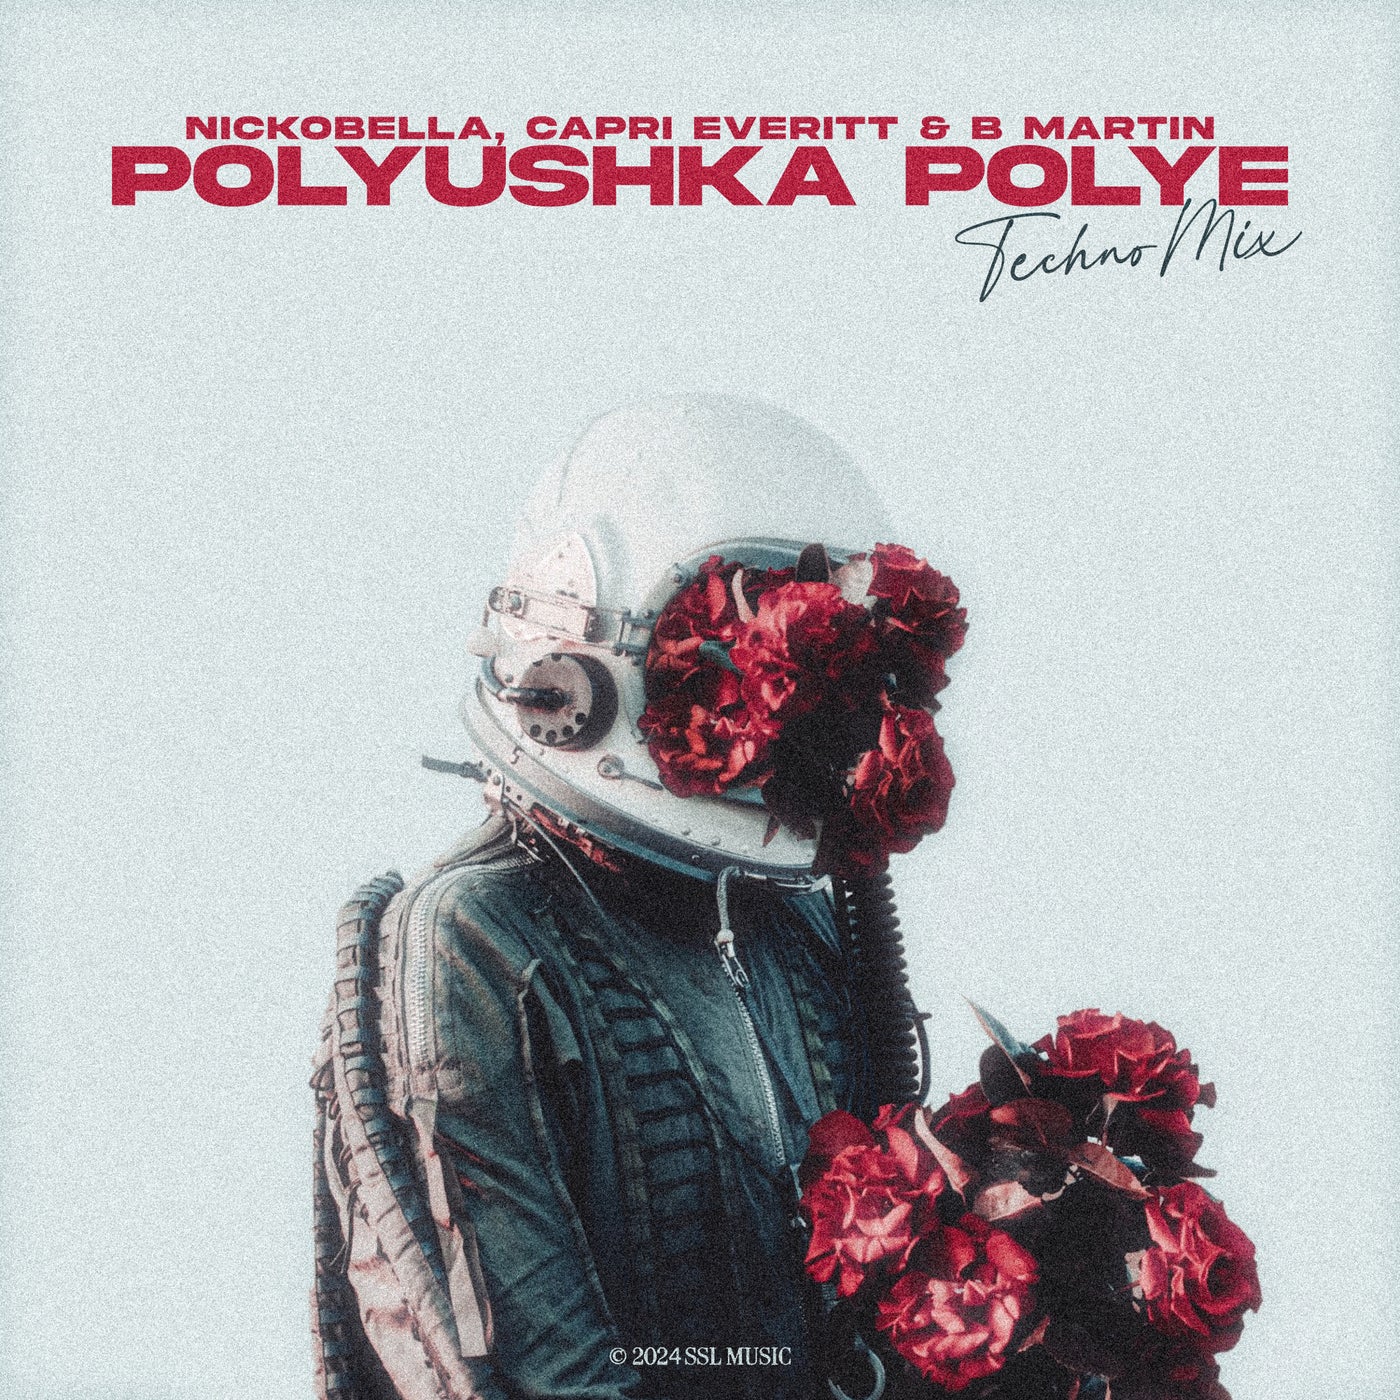 Polyushka Polye